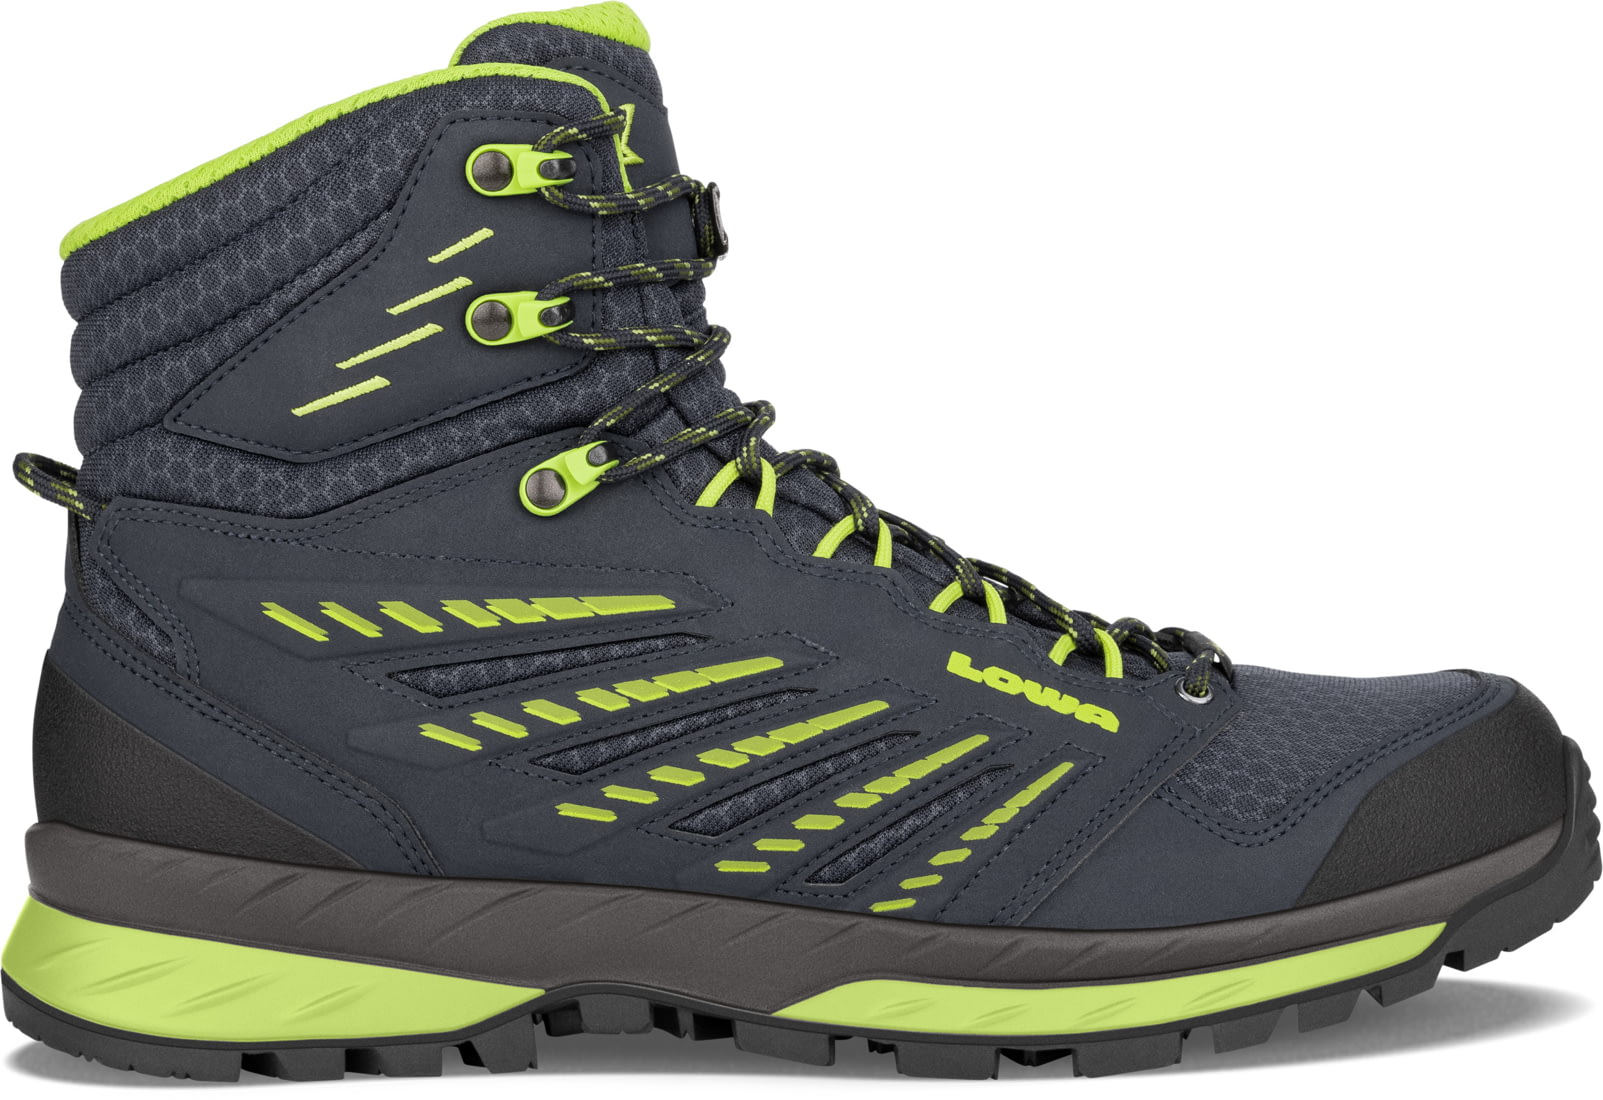 Lowa Trek Evo Gtx Mid Hiking Boots Mens Navylime — Mens Shoe Size 11 Us Gender Male 9507